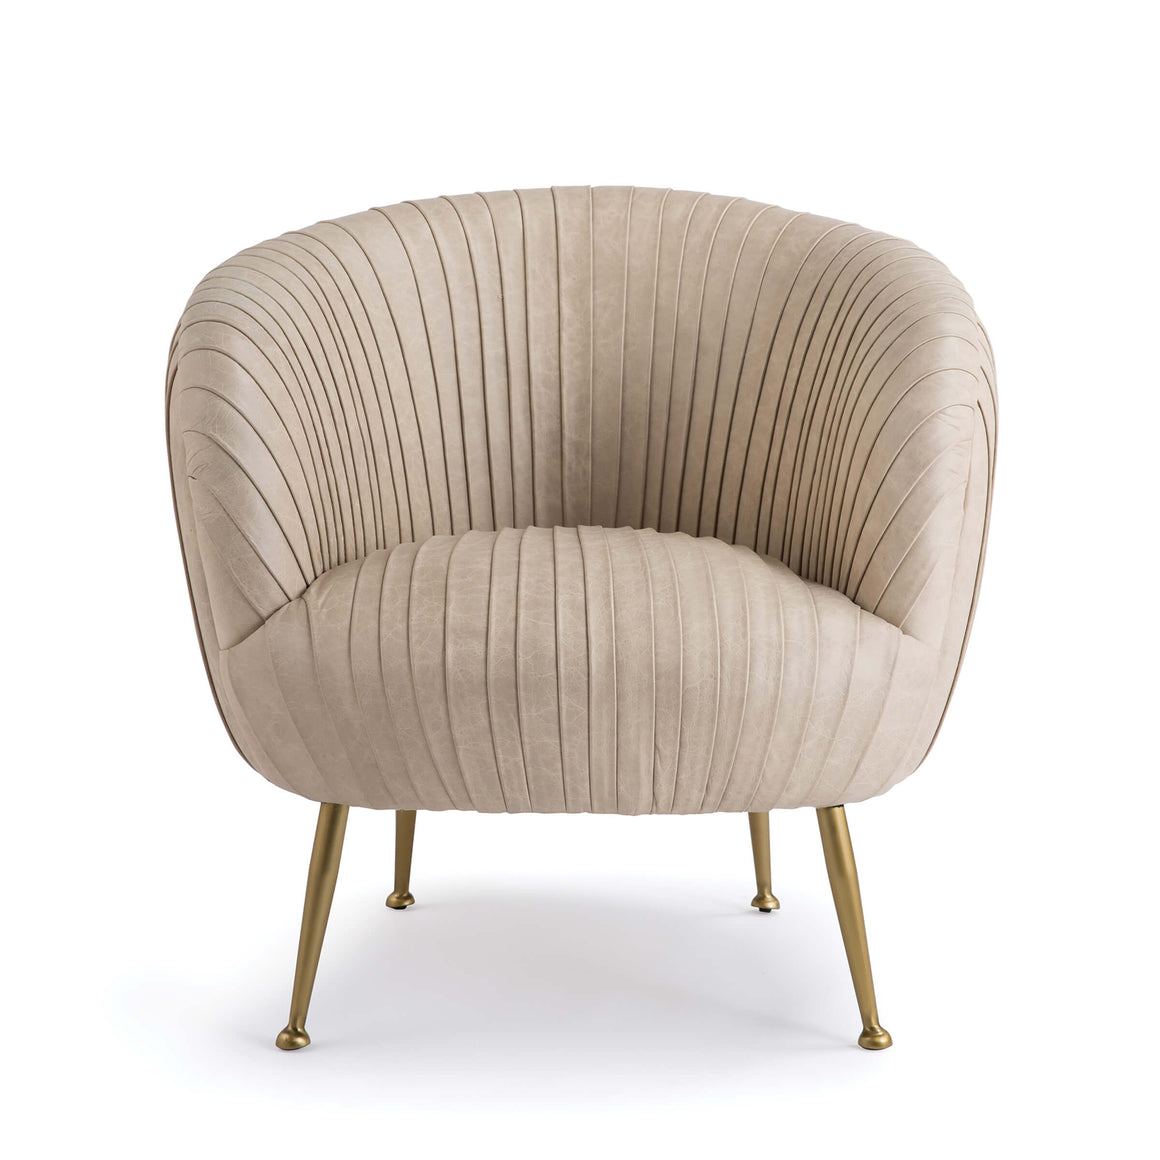 Regina Andrew Beretta Leather Chair (Cappuccino)